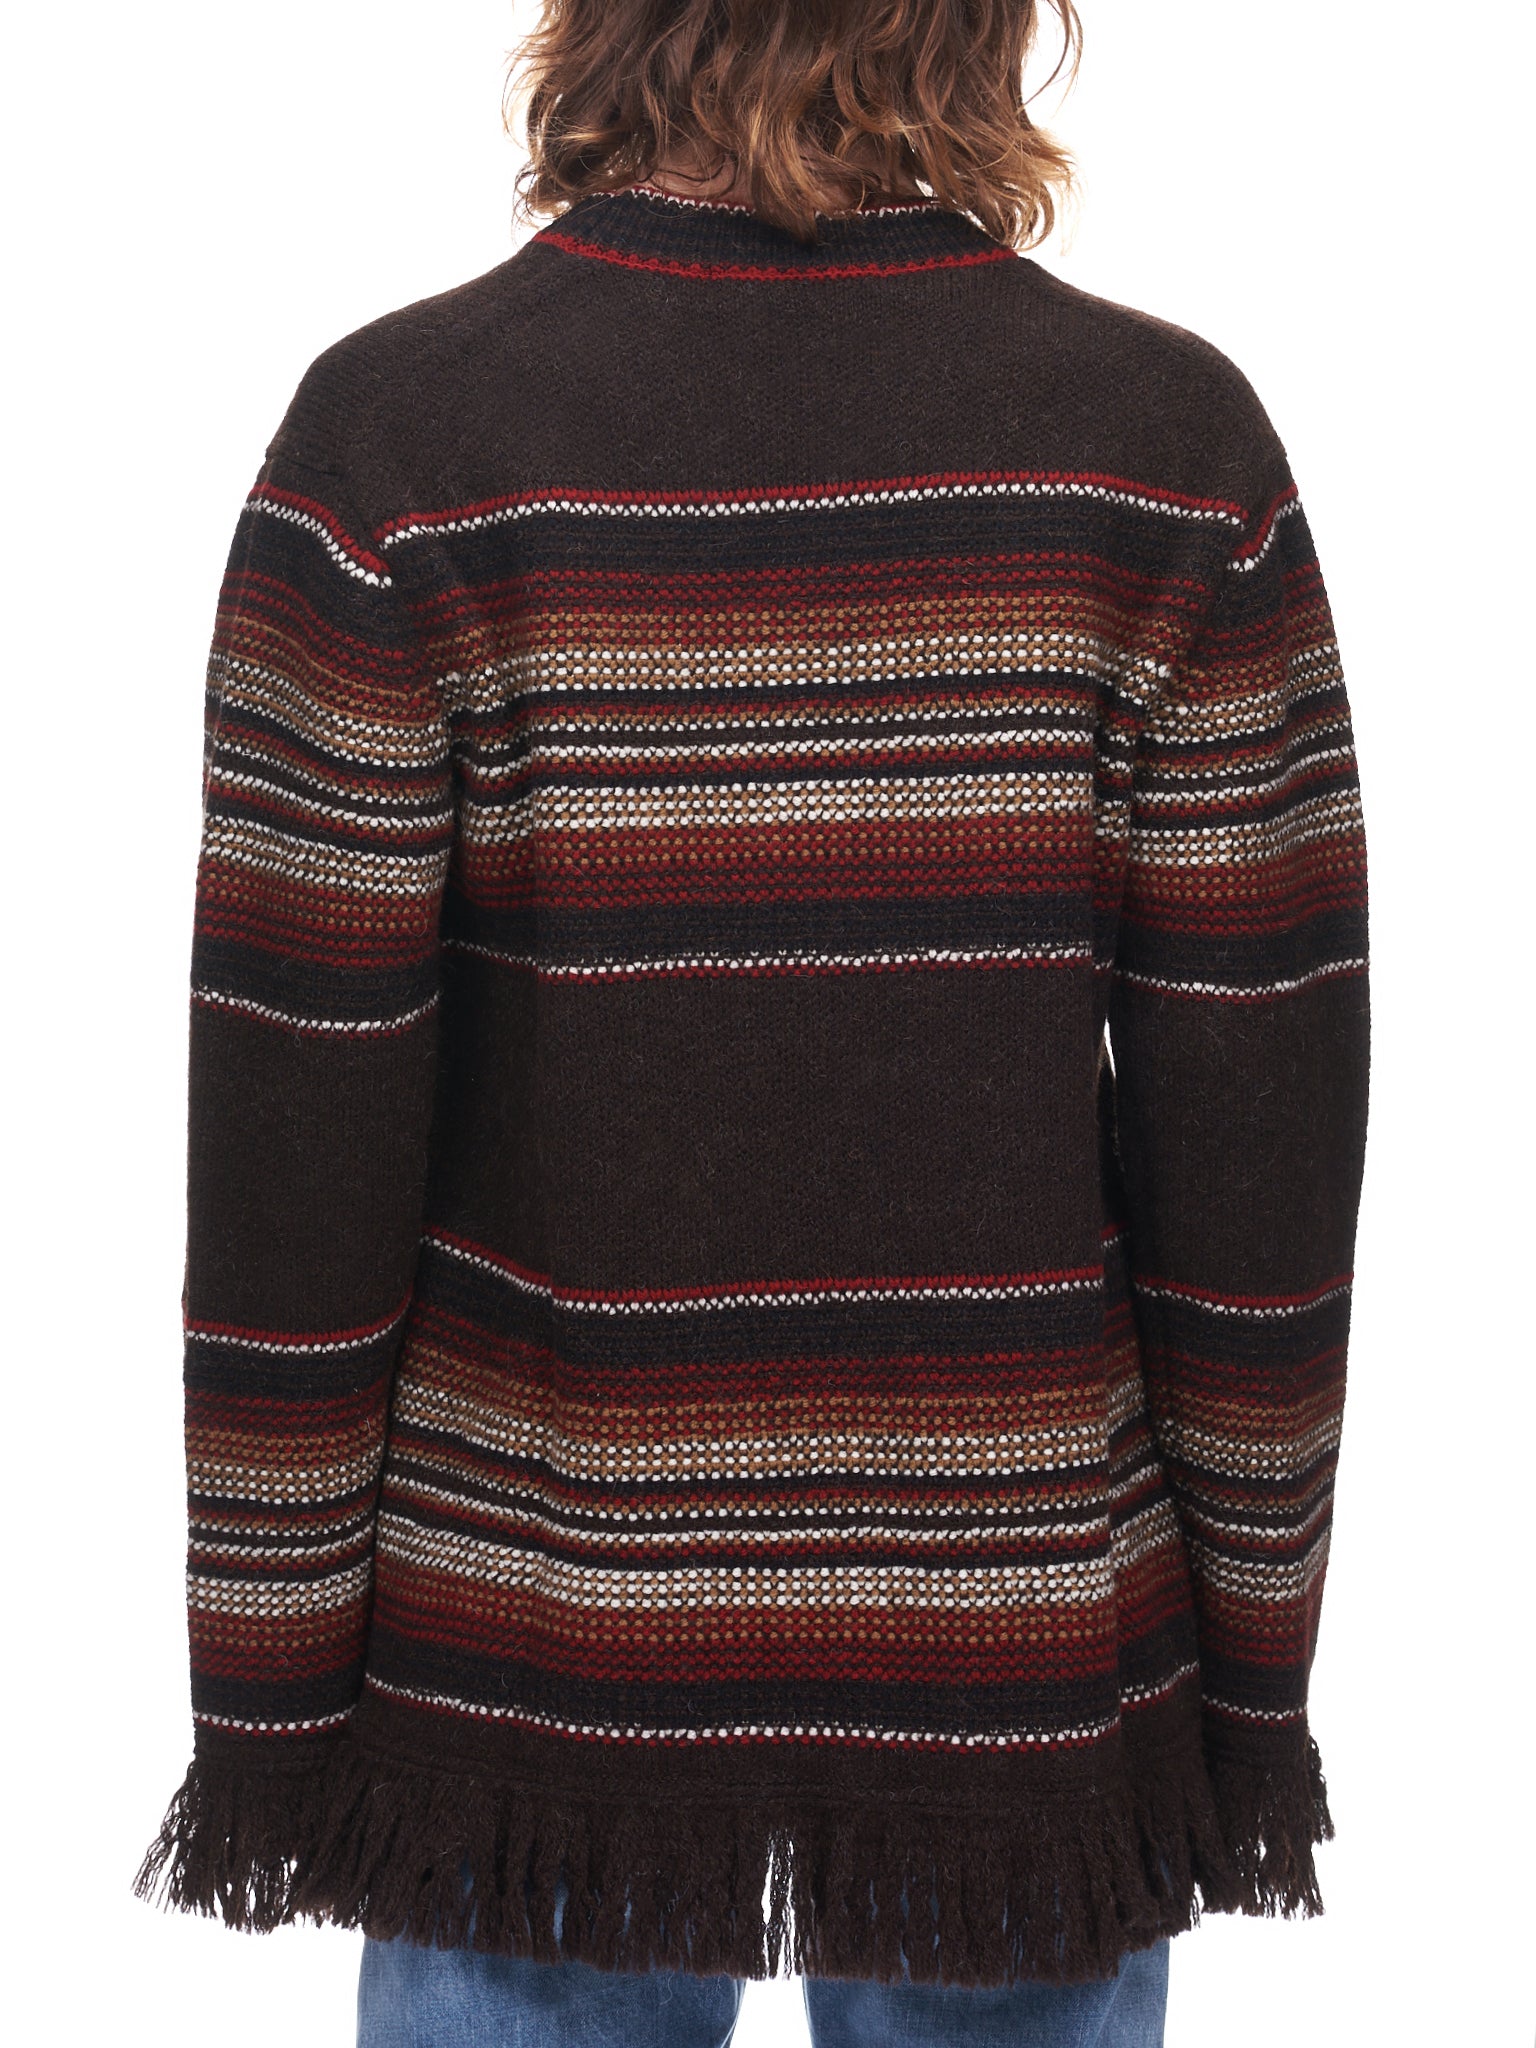 Knit Sweater (WJ-N011-051-BROWN)